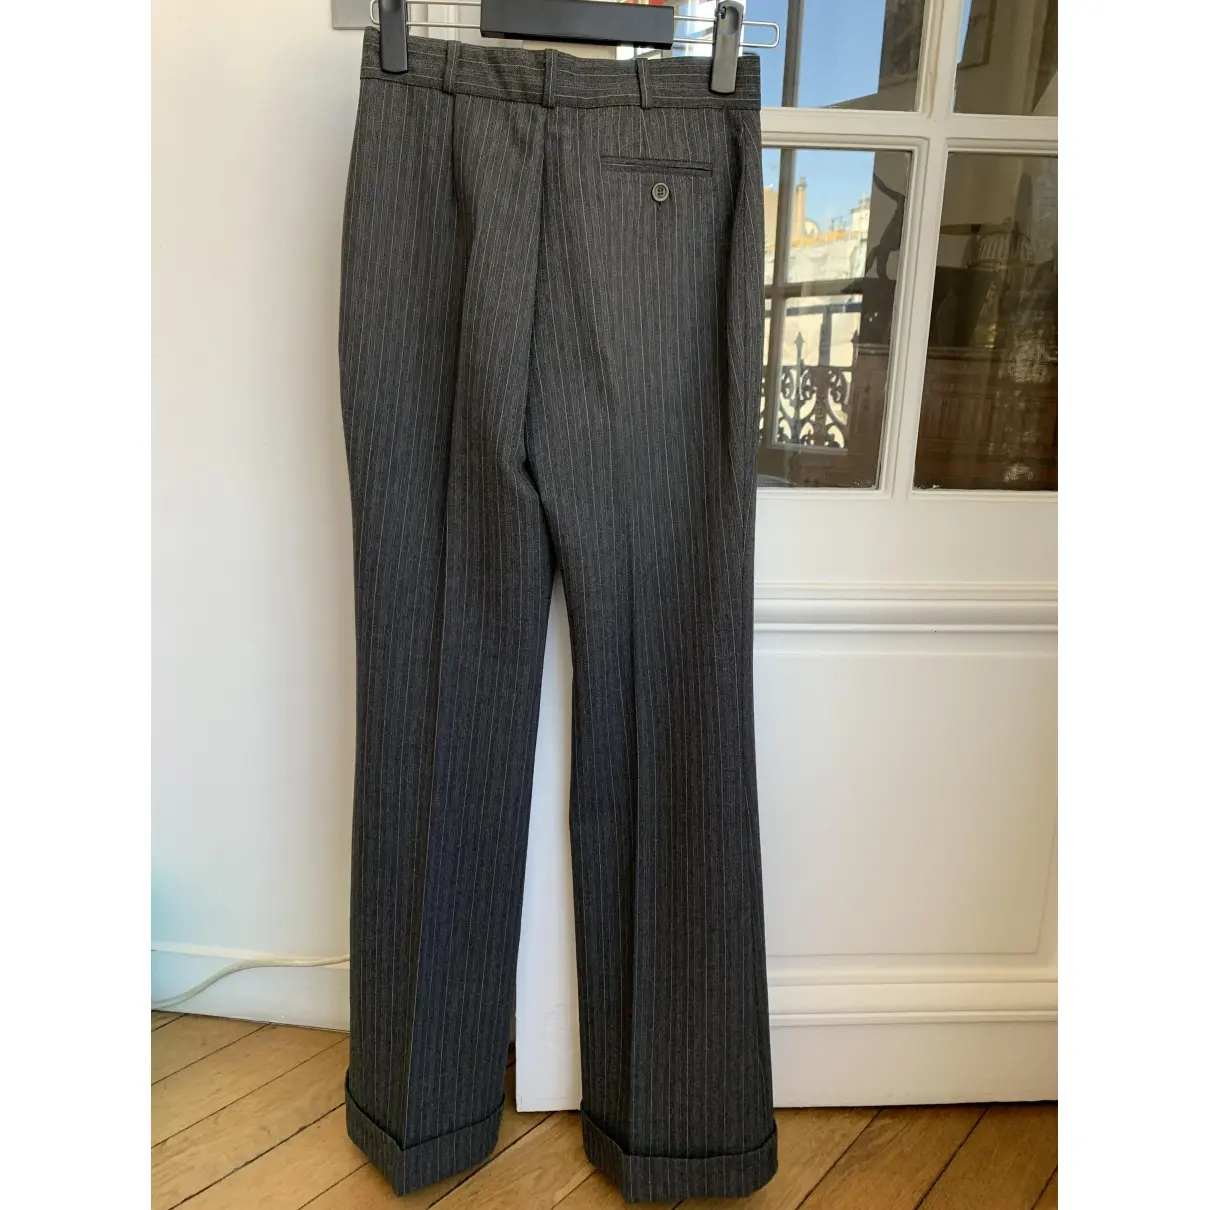 Tara Jarmon Large pants for sale